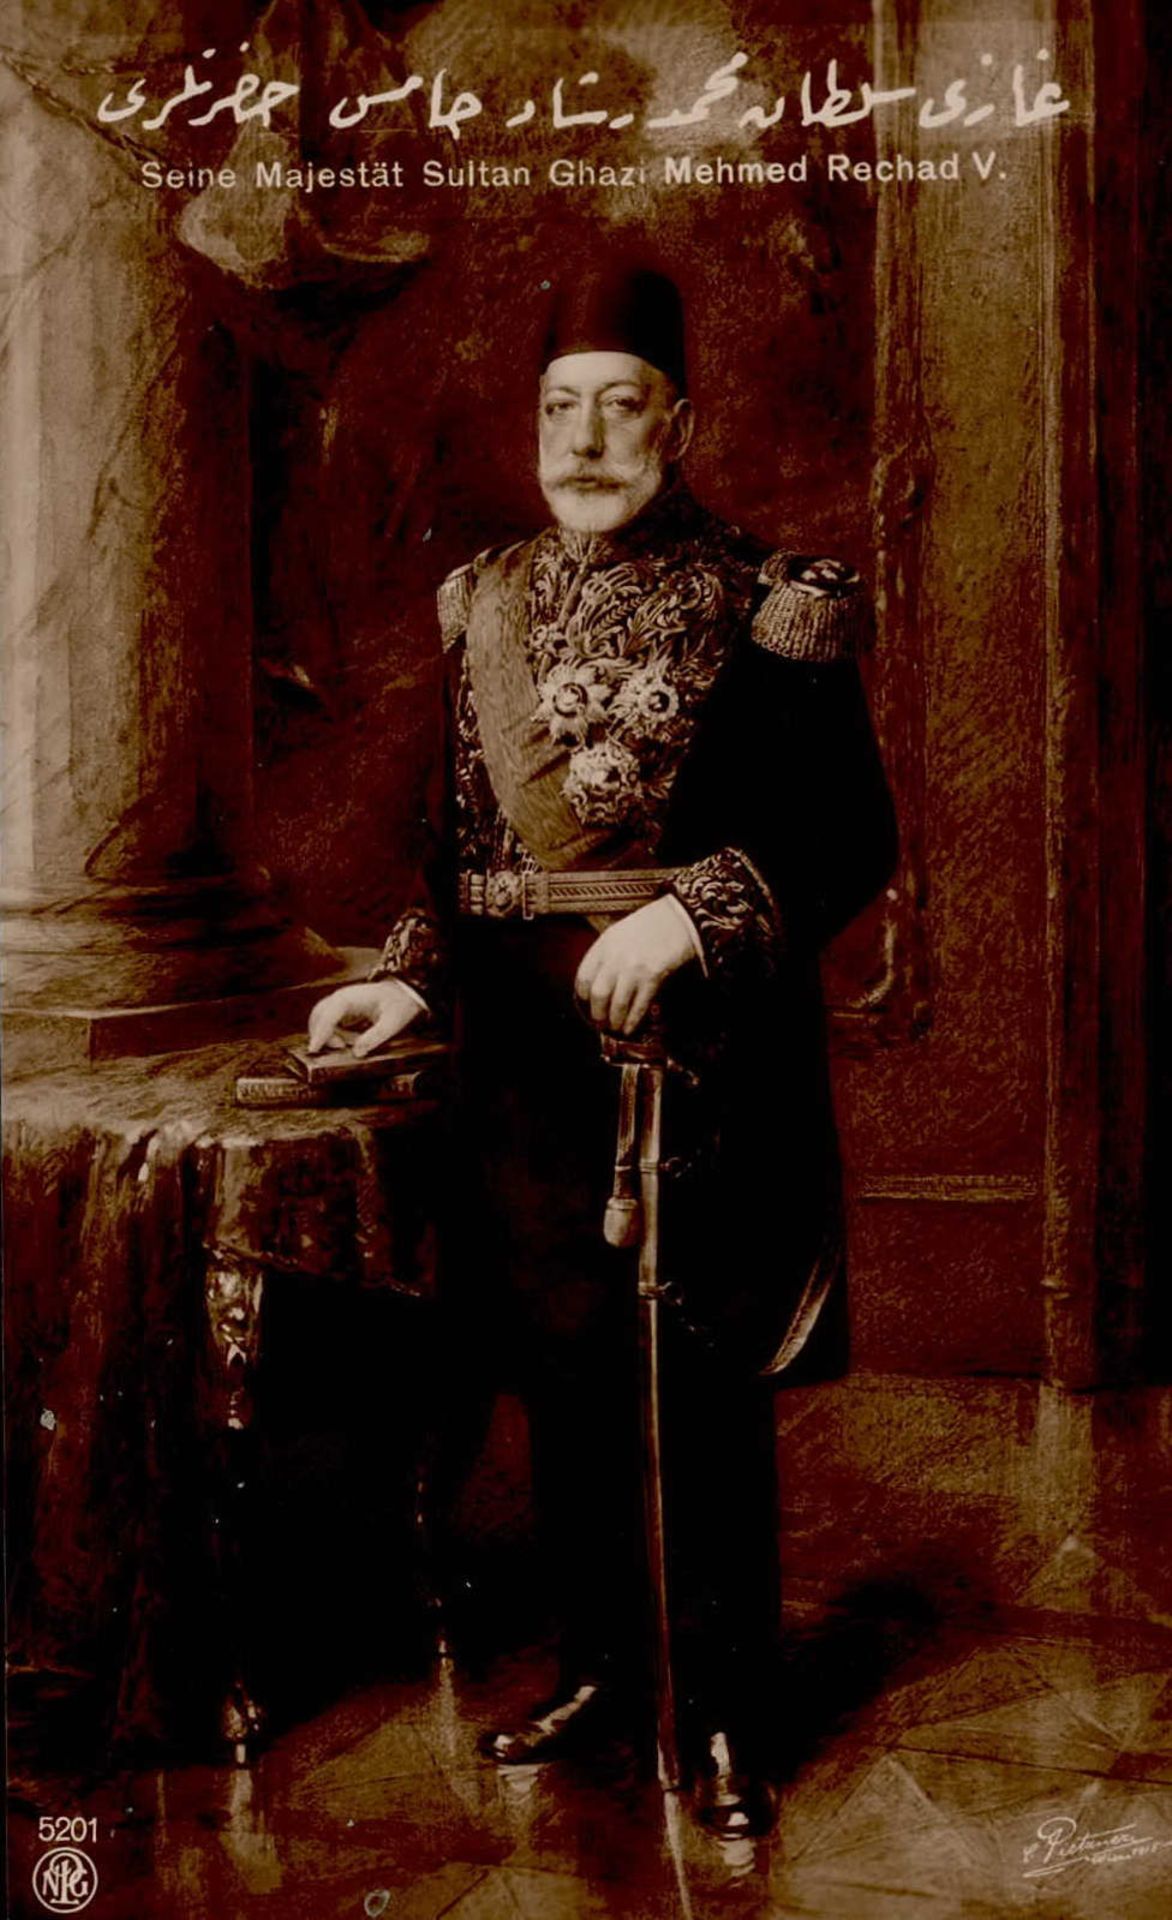 Adel Osmanisches Reich Sultan Ghazi Mehmed Rechad I-II